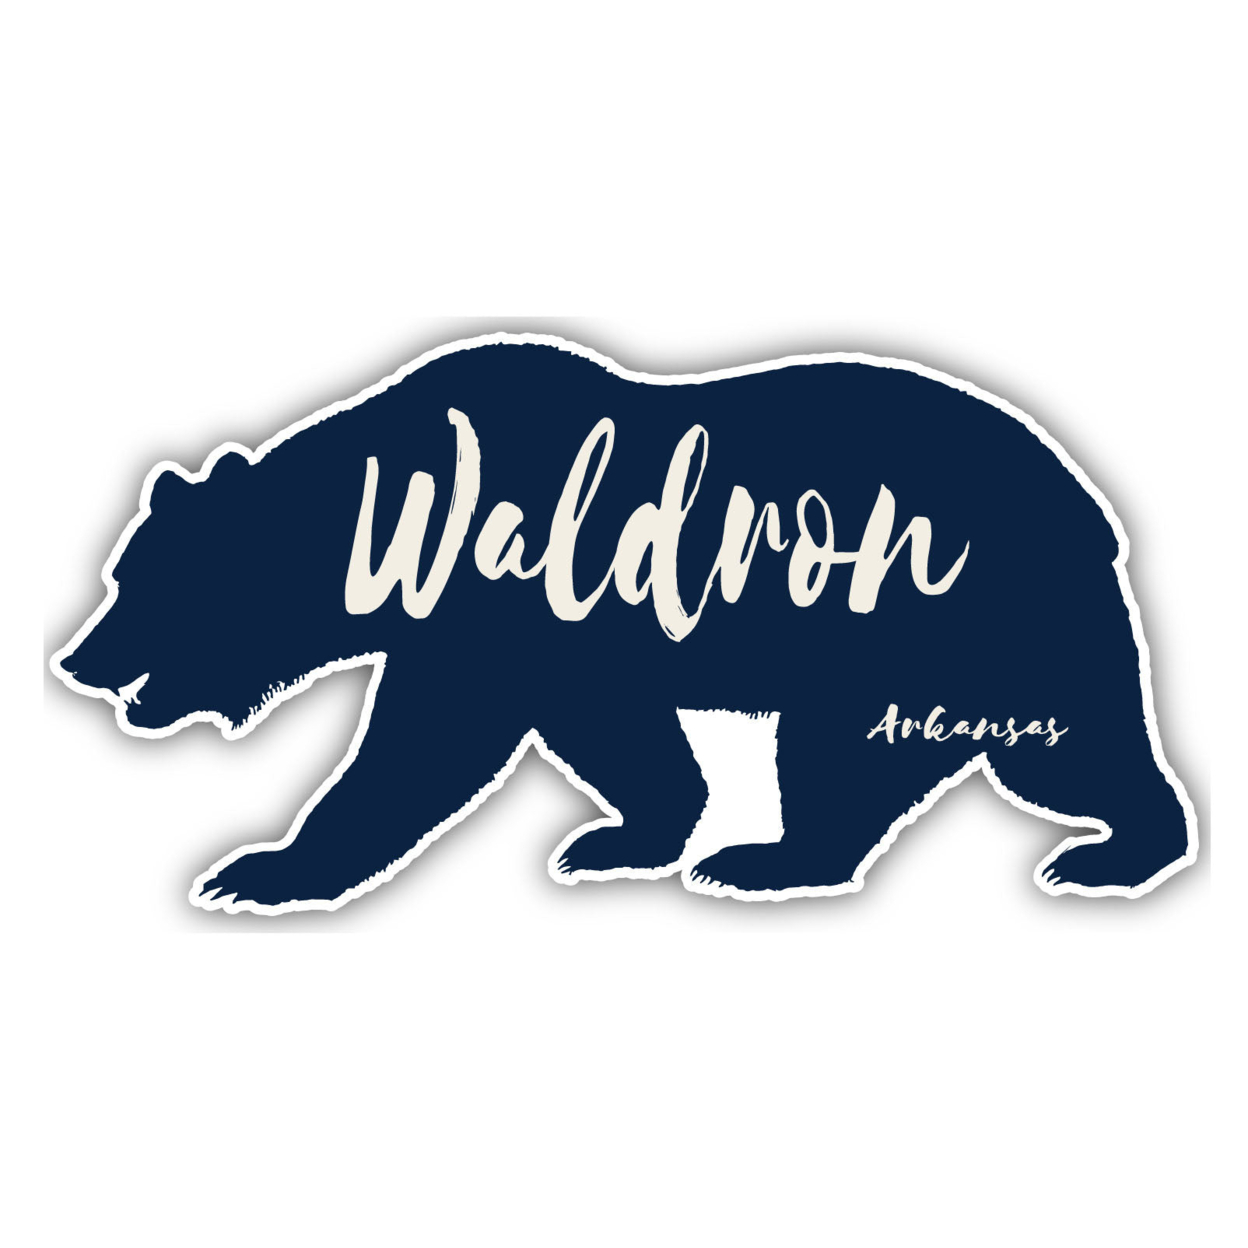 Waldron Arkansas Souvenir Decorative Stickers (Choose Theme And Size) - Single Unit, 2-Inch, Bear